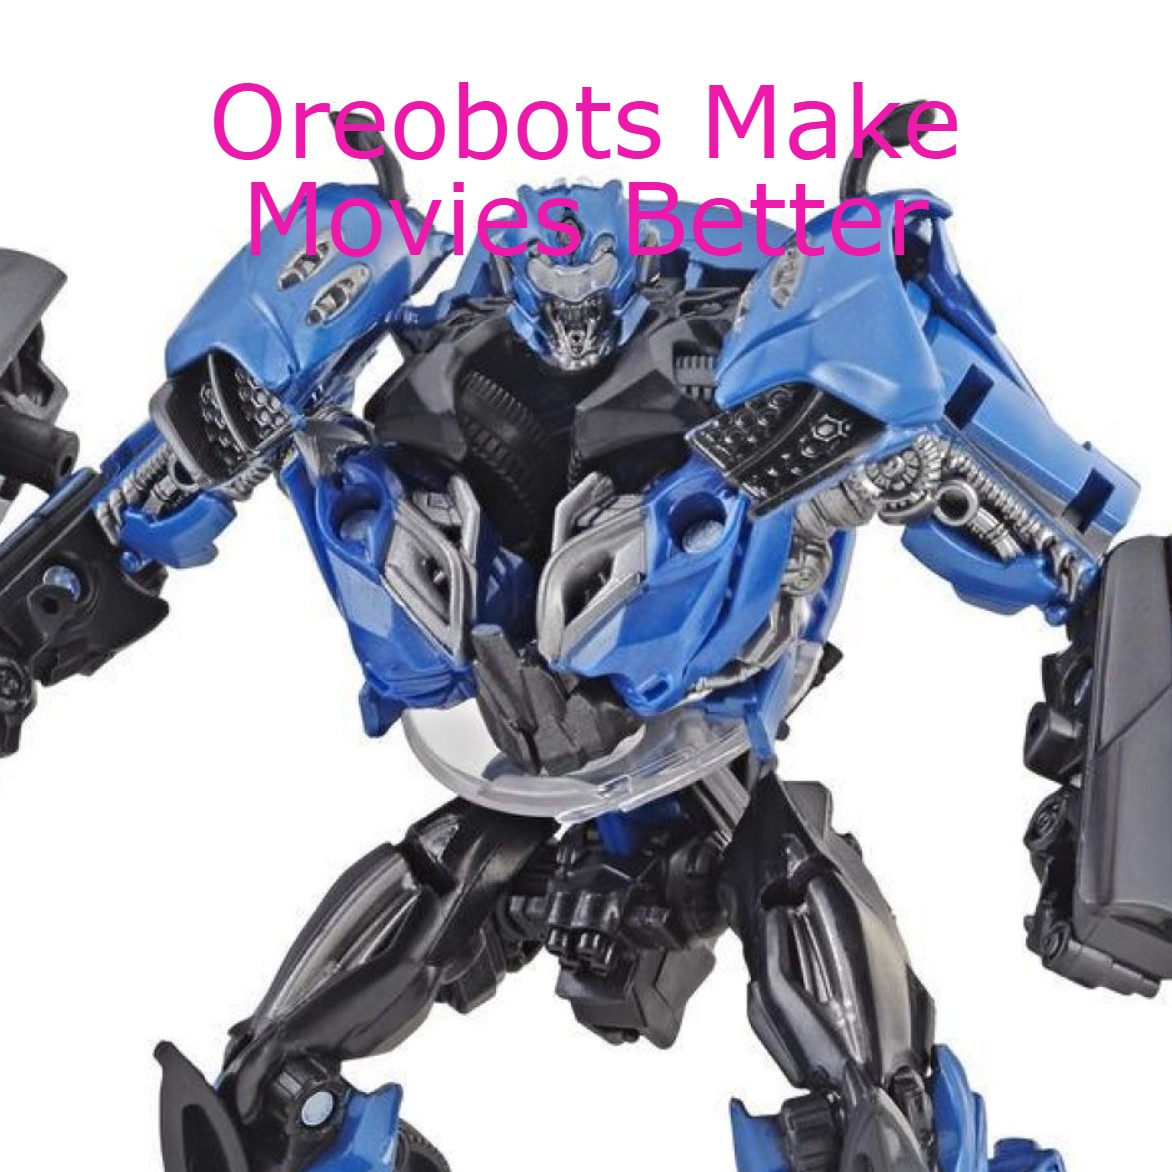 Oreobots Make Movies Better